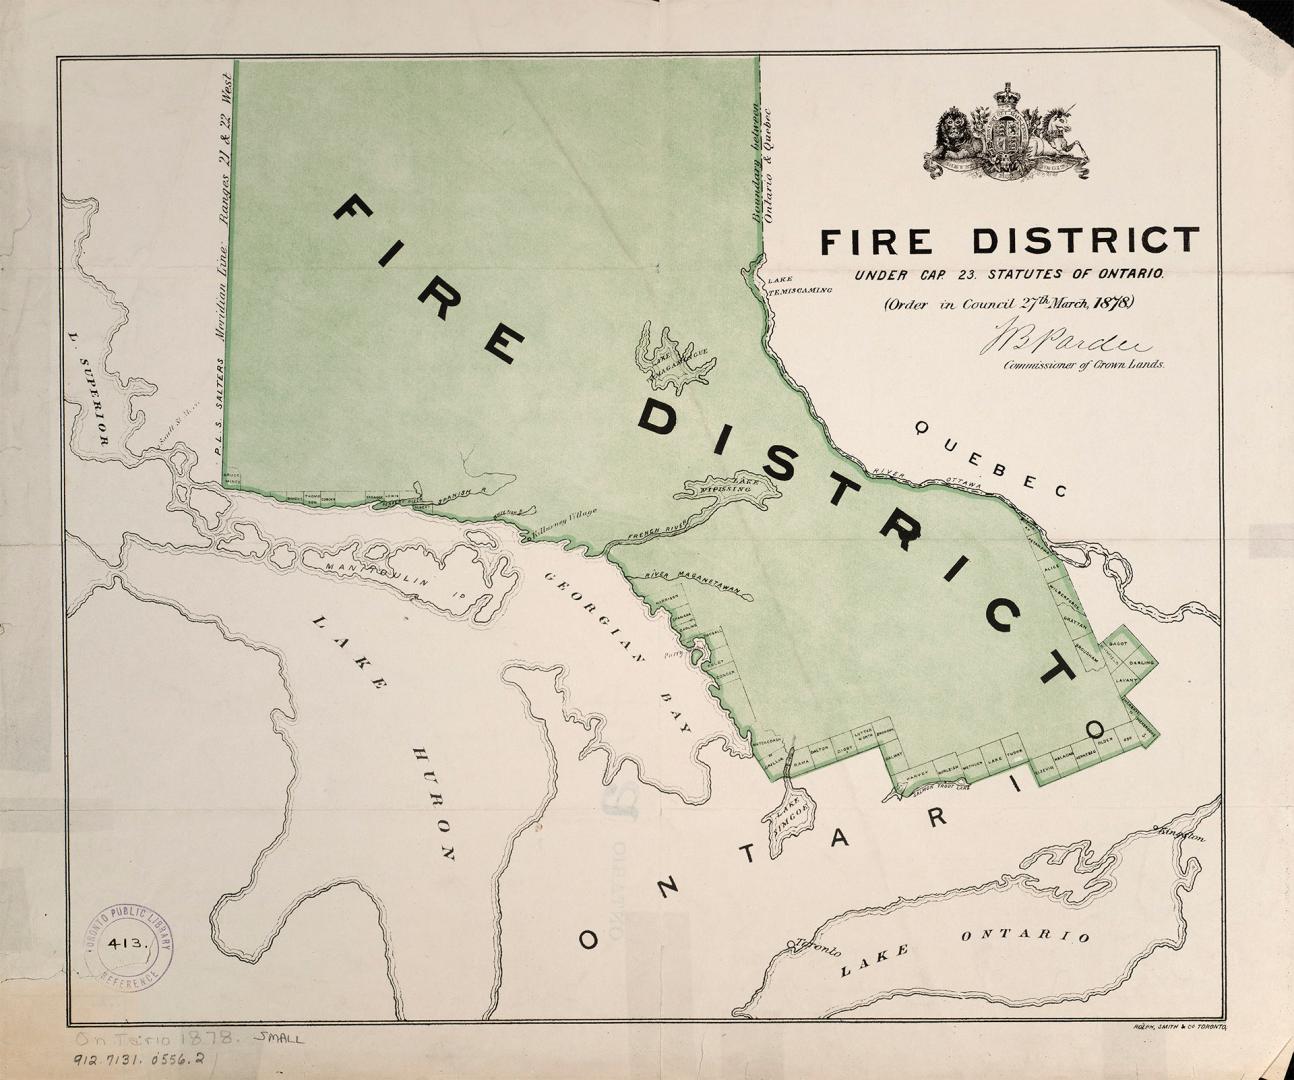 Fire District under cap. 23 statutes of Ontario